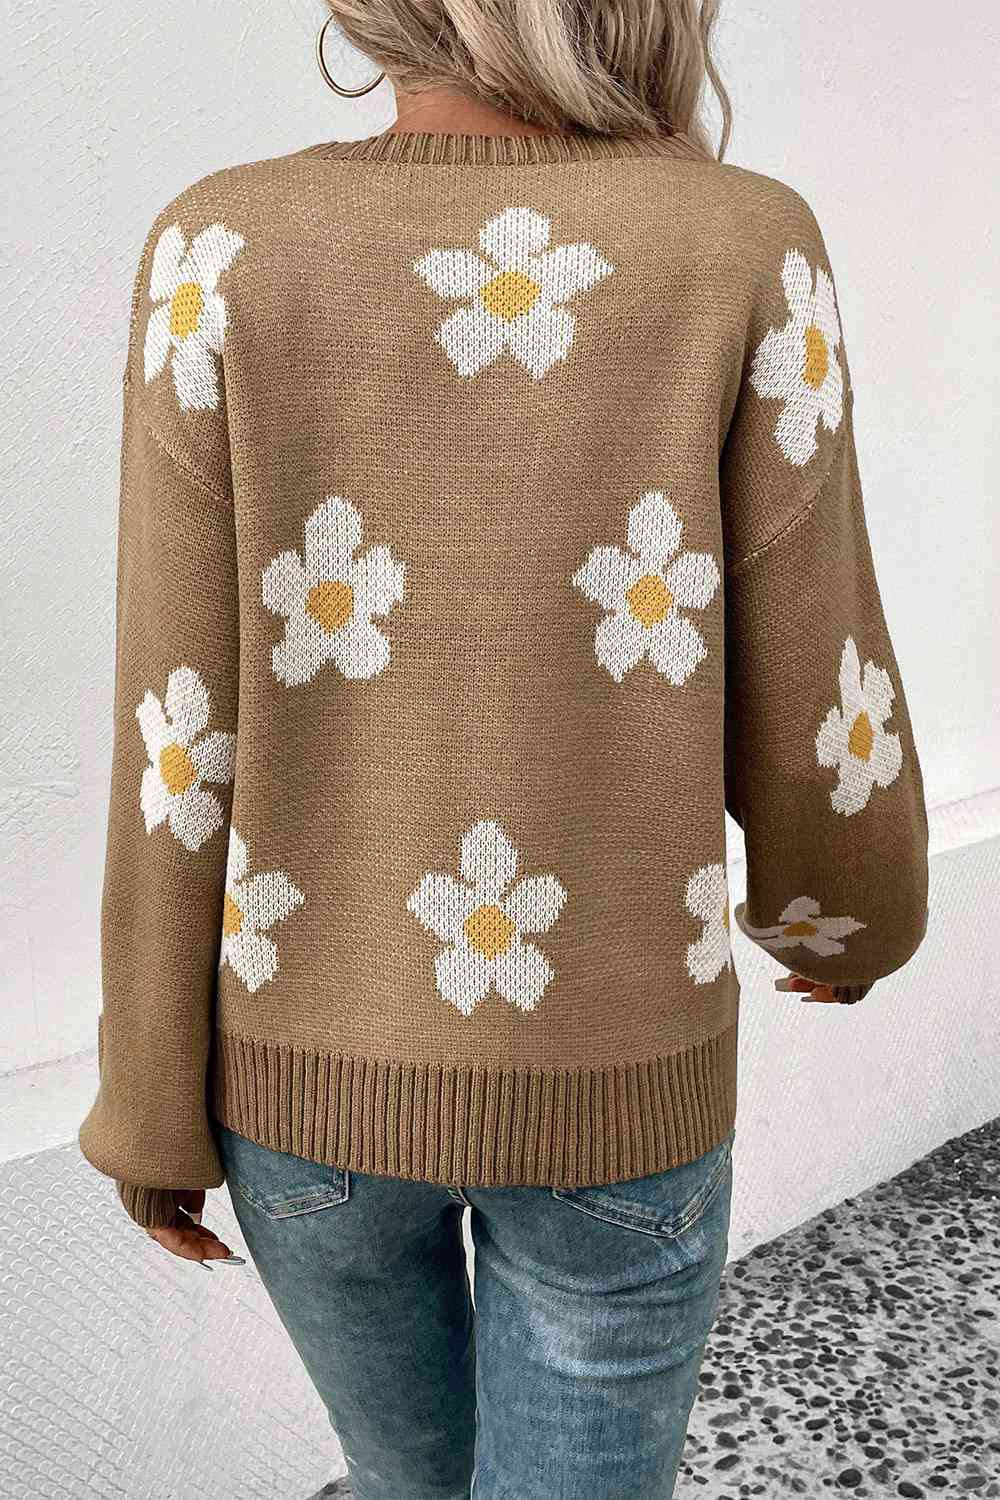 Daisy Flower Knit Minimalist Pullover Classic Long Sleeve Sweater Shirt